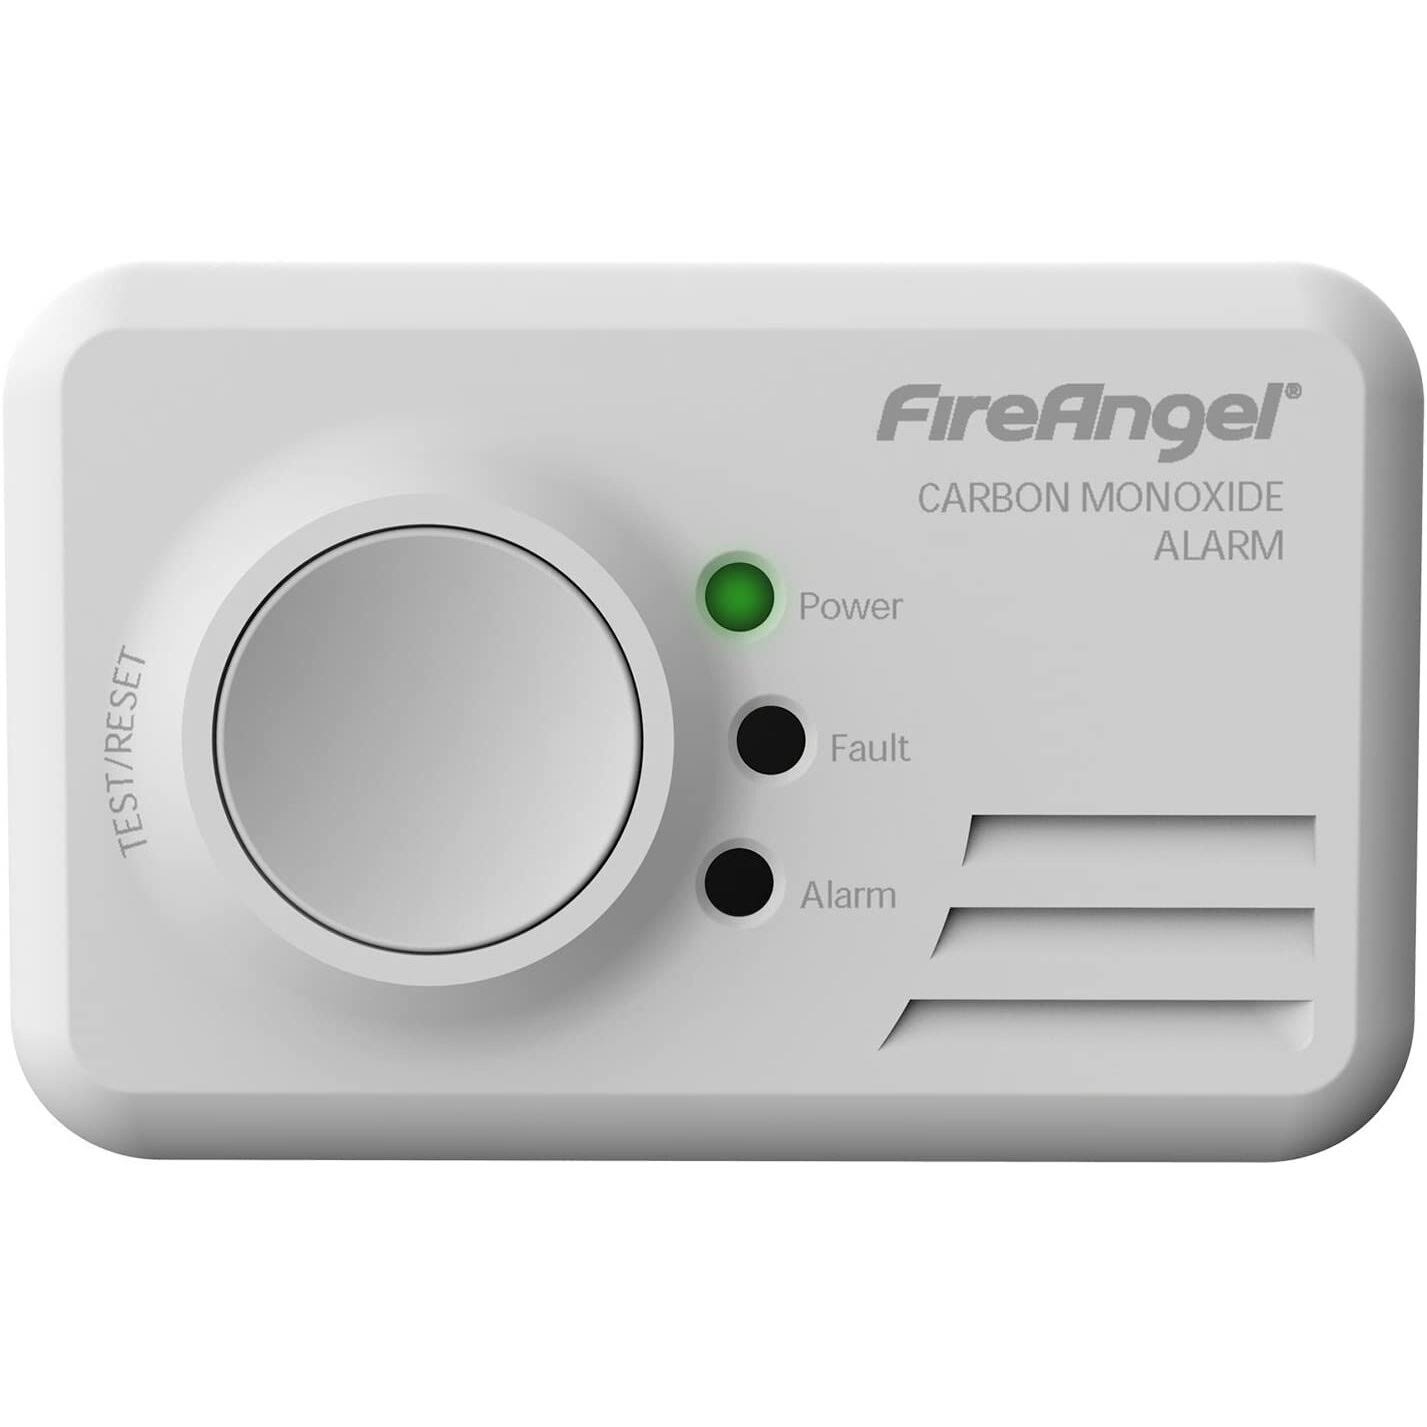 Fireangel Carbon Monoxide Alarm - 7 Years Life